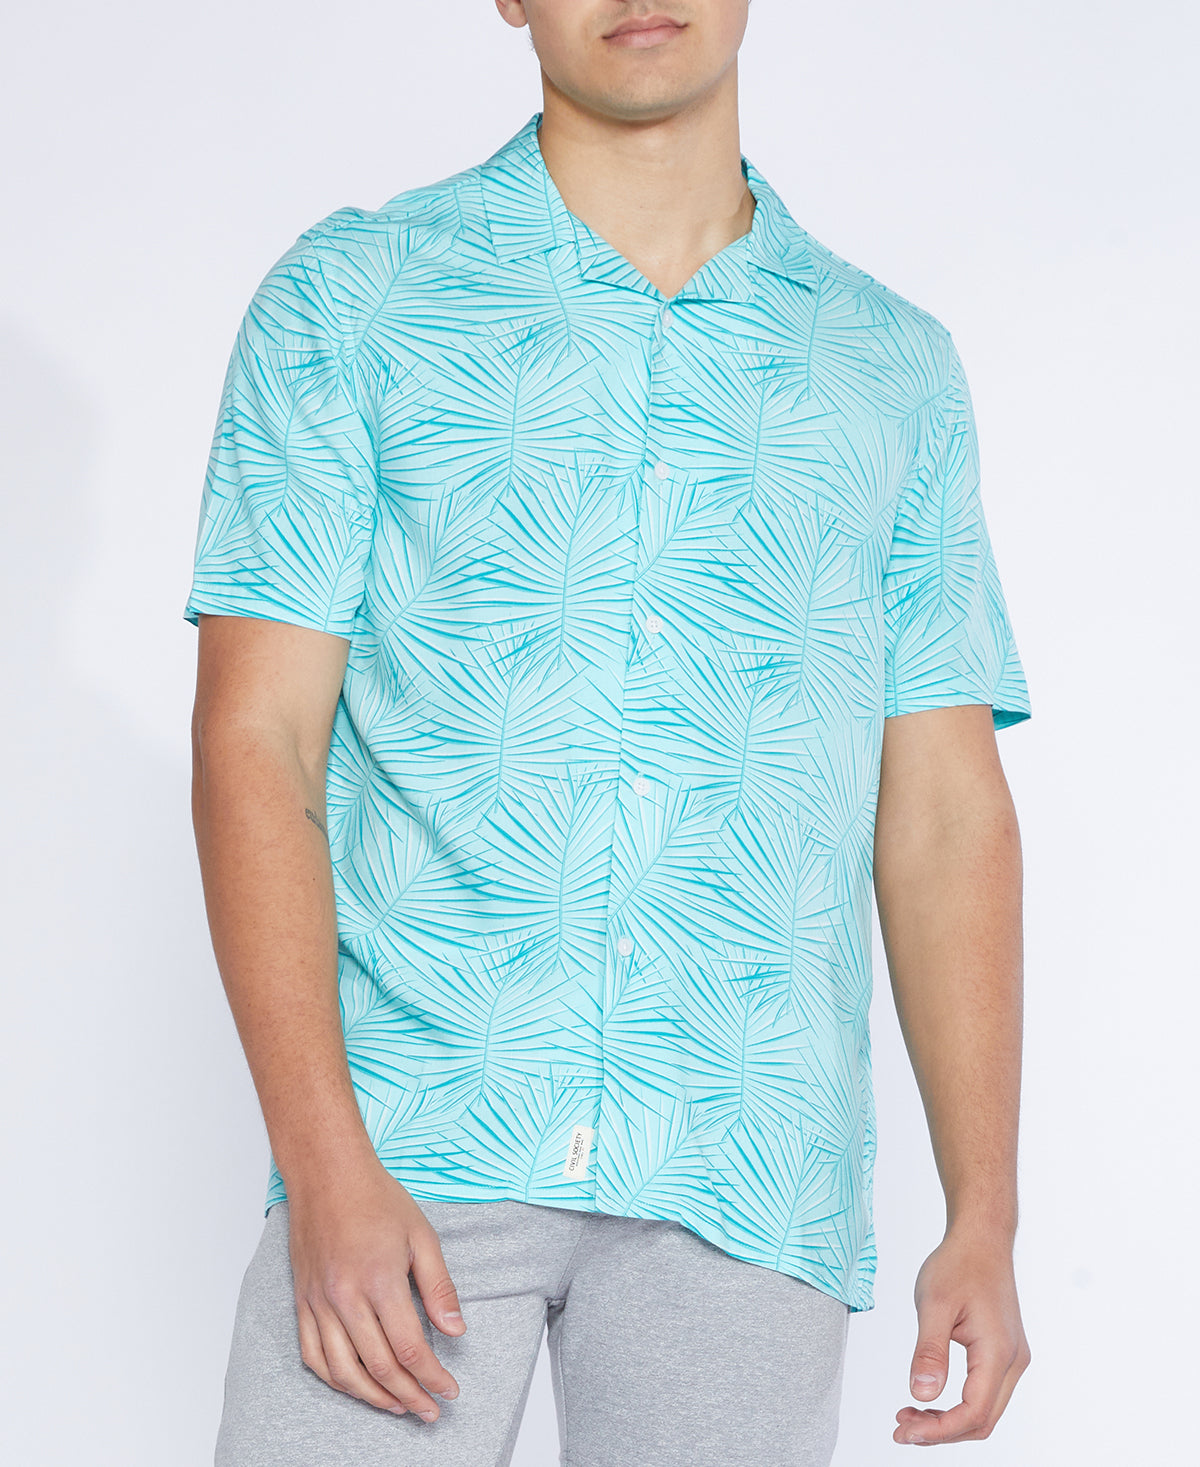 Frond Printed Resort – CIVIL SOCIETY (Turquoise) Shirt